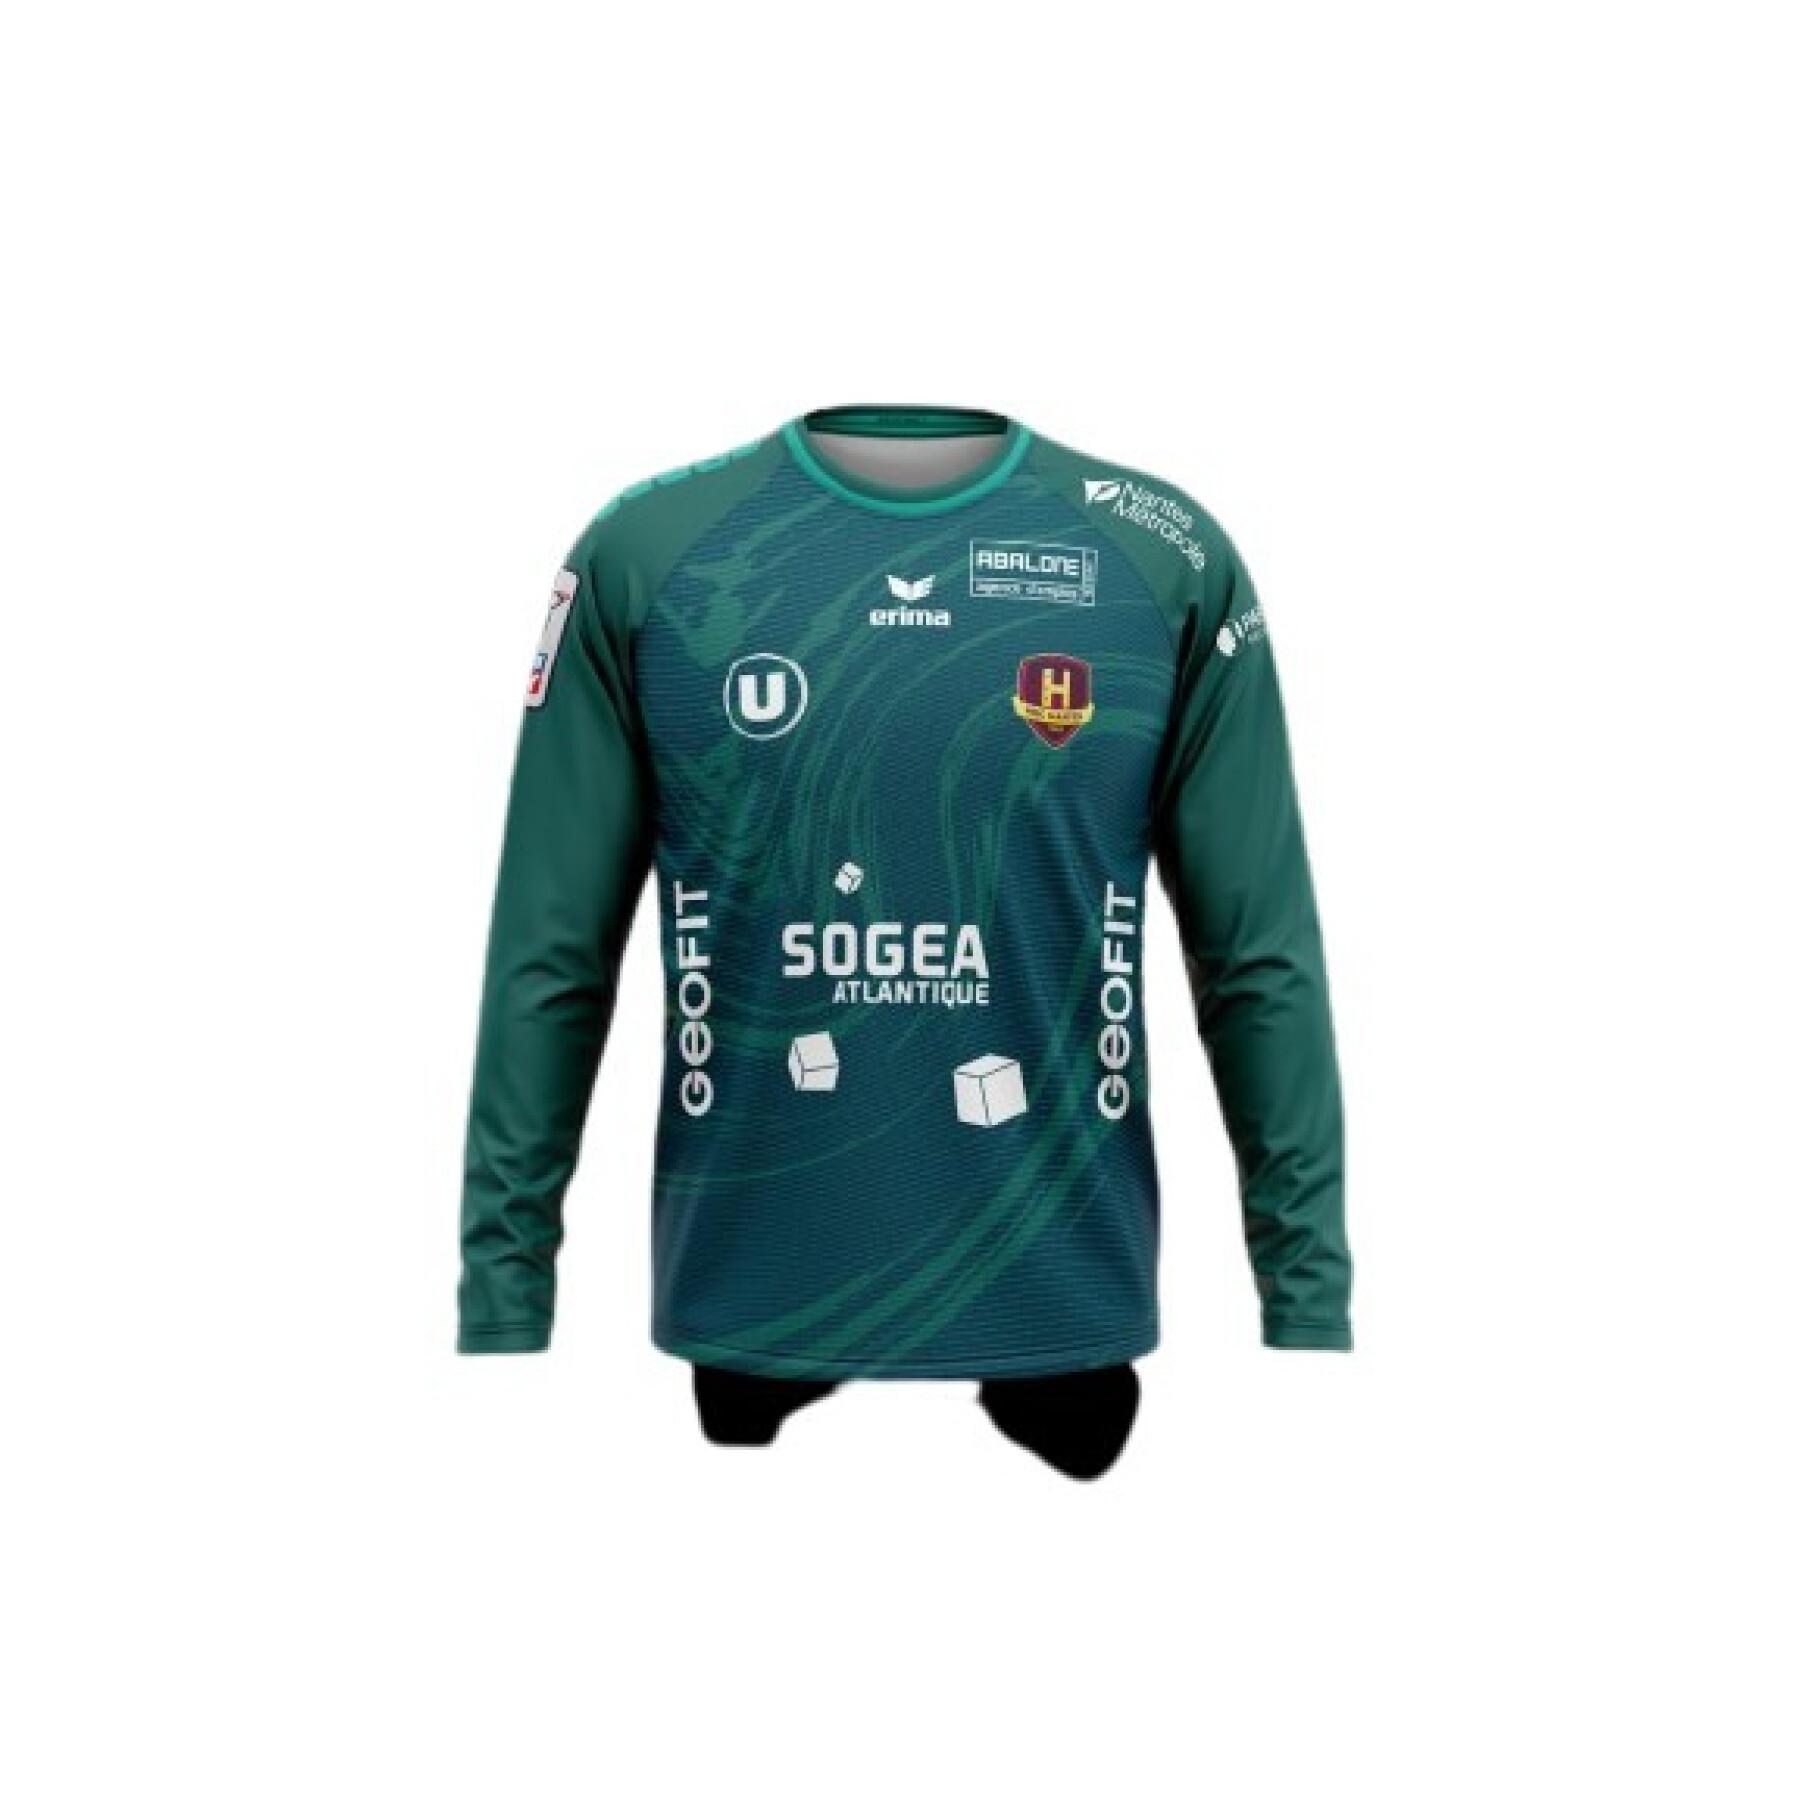 Goalkeeper jersey Nantes 2021/22